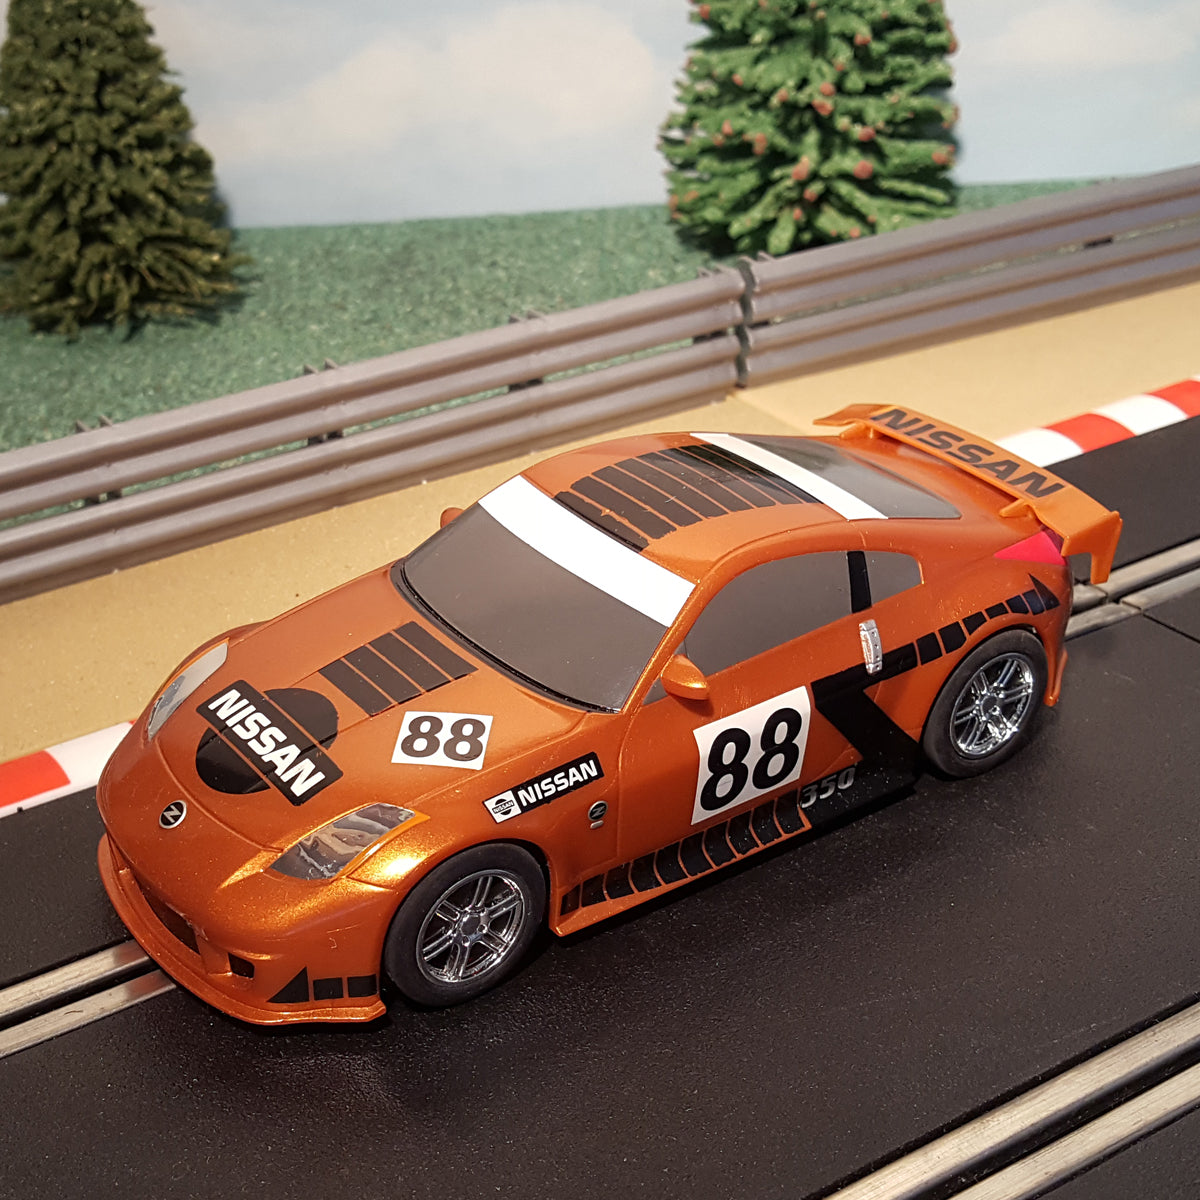 Scalextric 1:32 Drift Car - Nissan 350Z Bronze #88 - Action Slot Racing